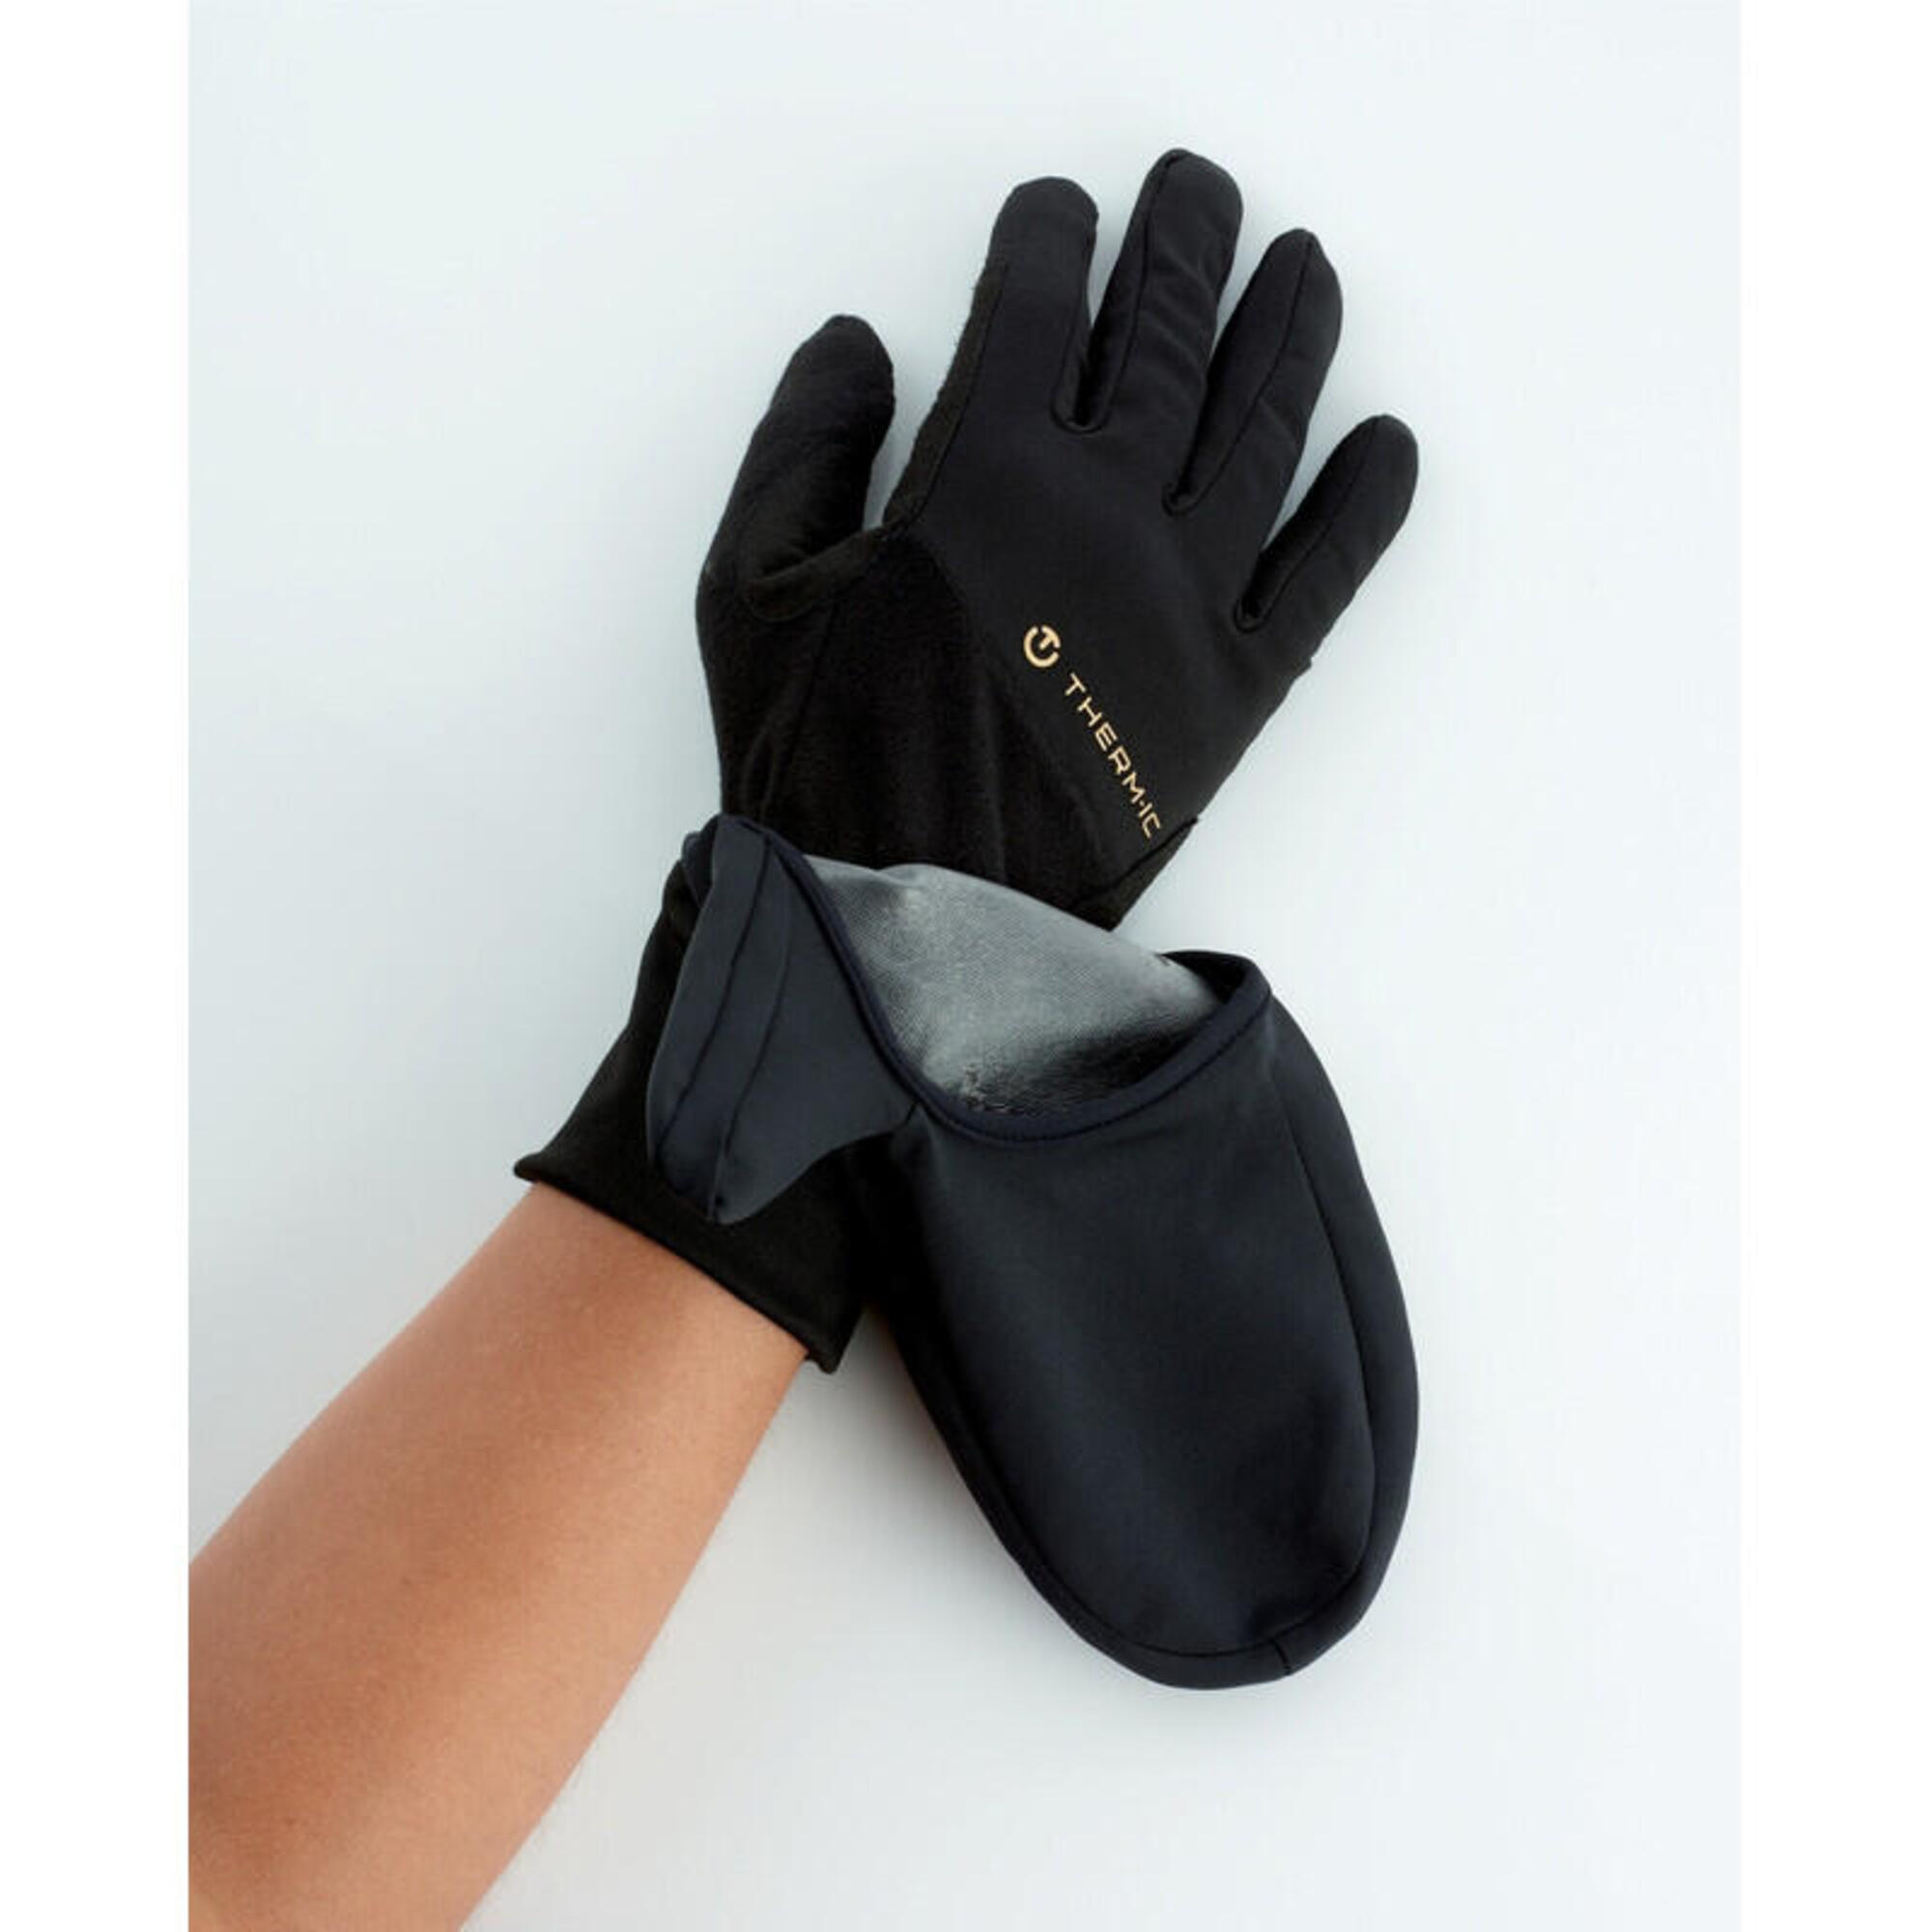 Guantes híbridos e ligeros, convertibles en manoplas - Versatile Light Gloves